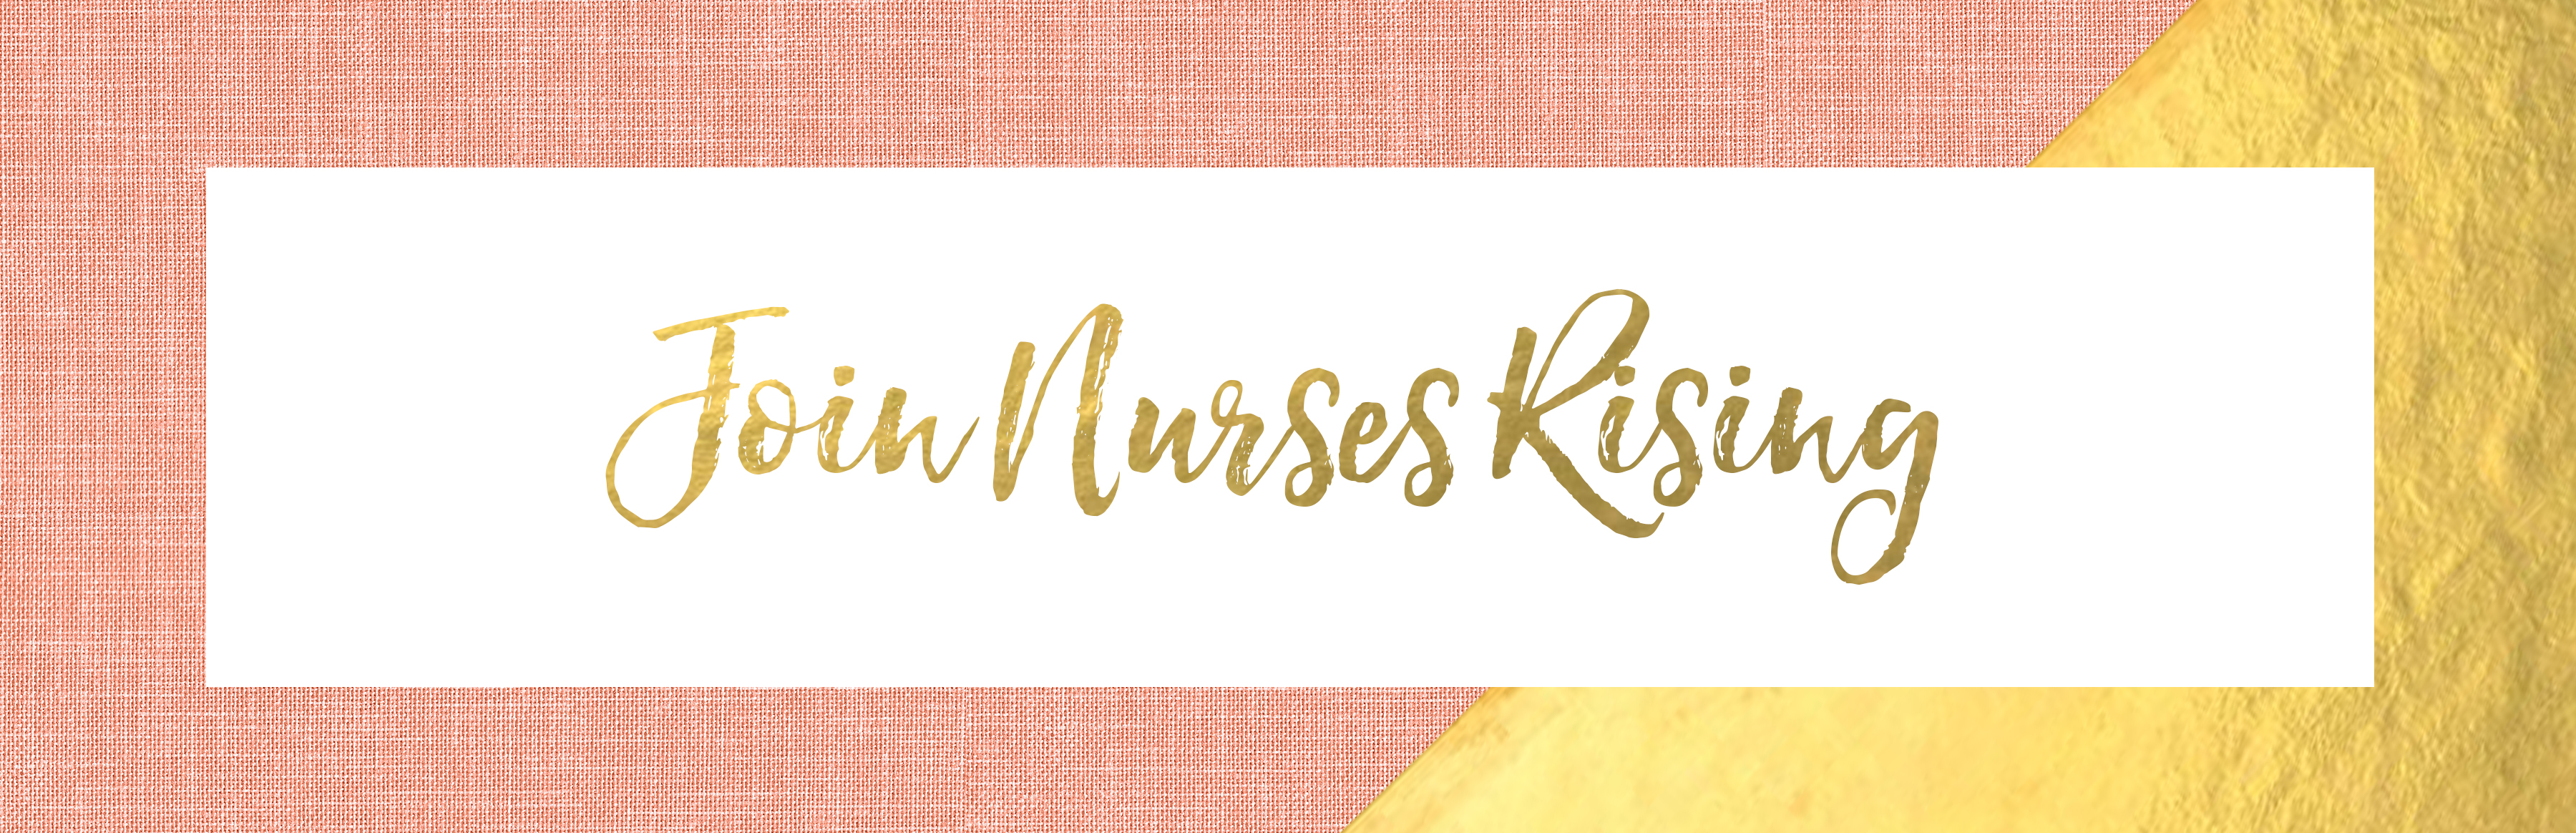 join-nurses-rising